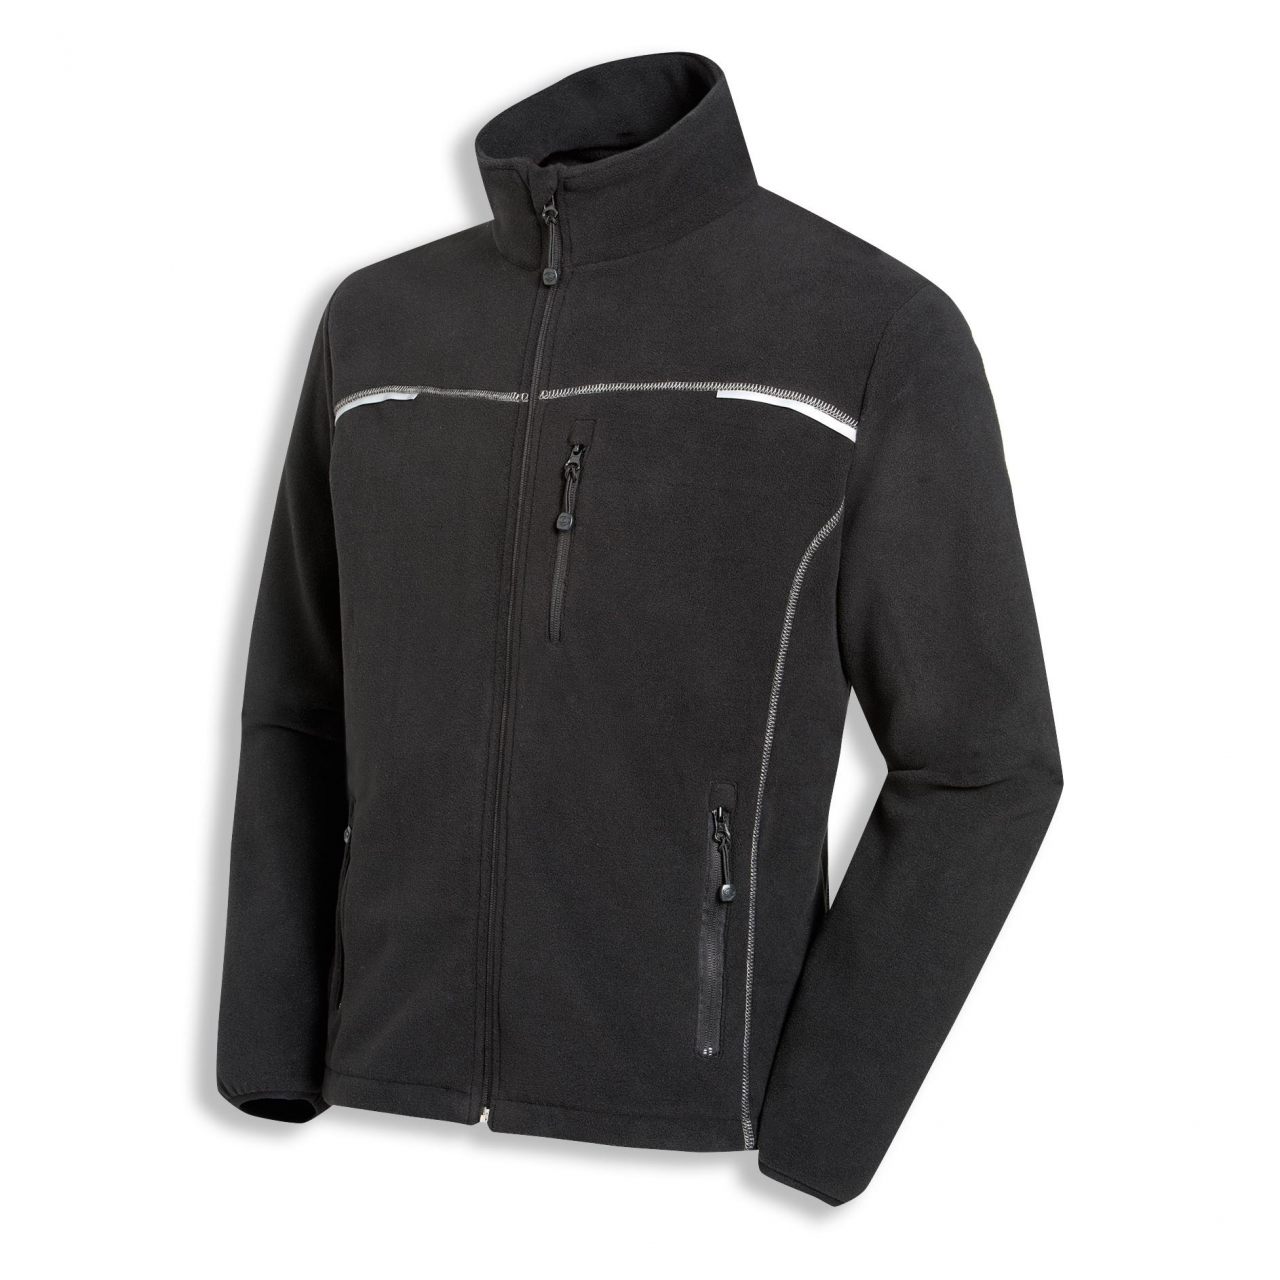 uvex perfect basic fleece jacket | Protective clothing and workwear ...